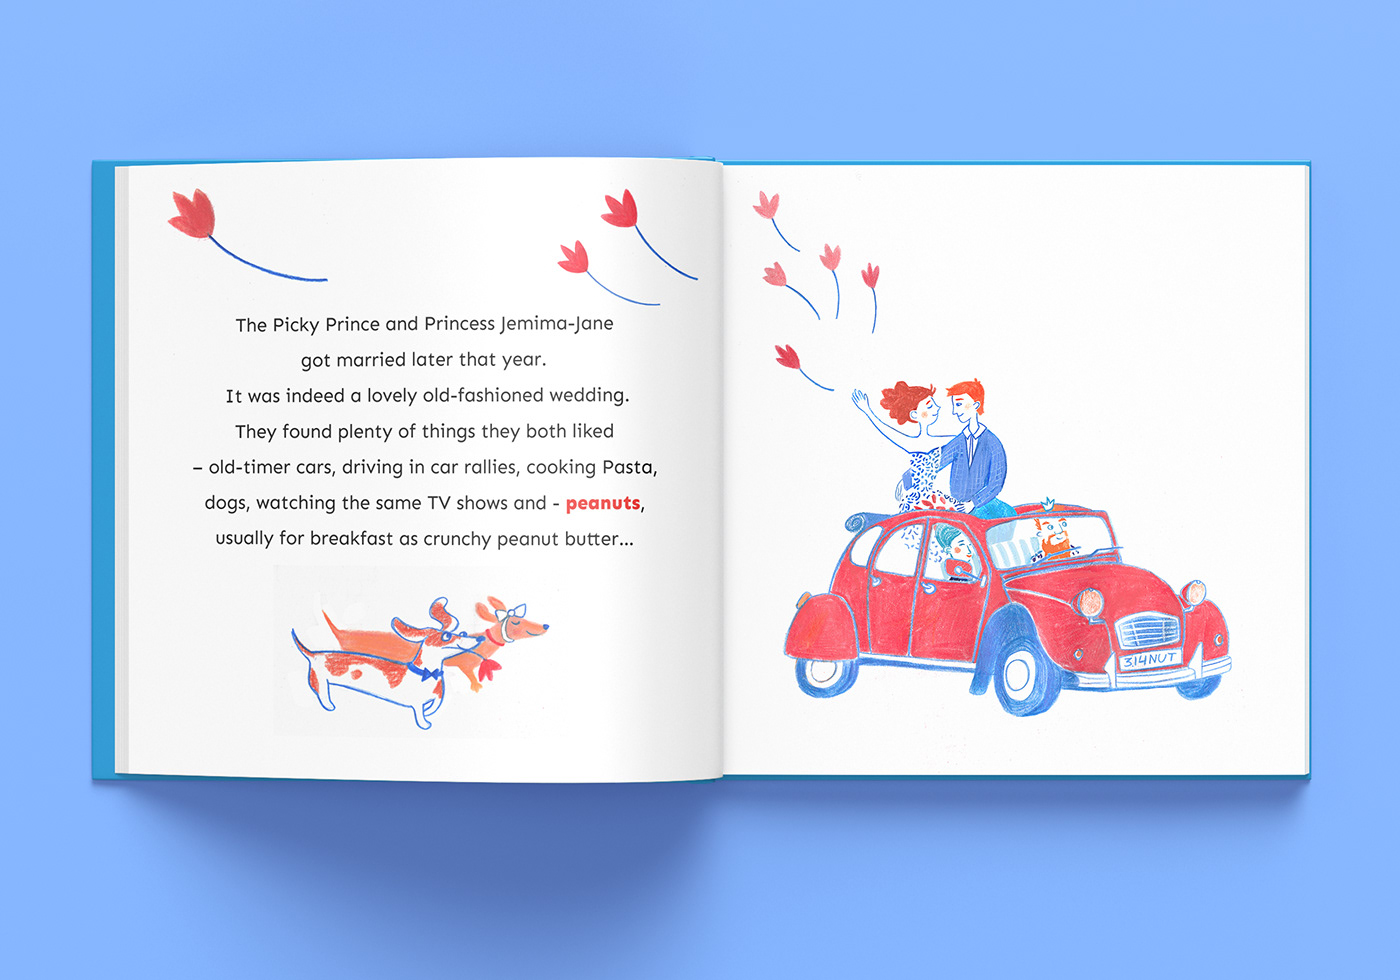 book illustration car characters dog kidlit Picture book Princess children's book fairytale princesses